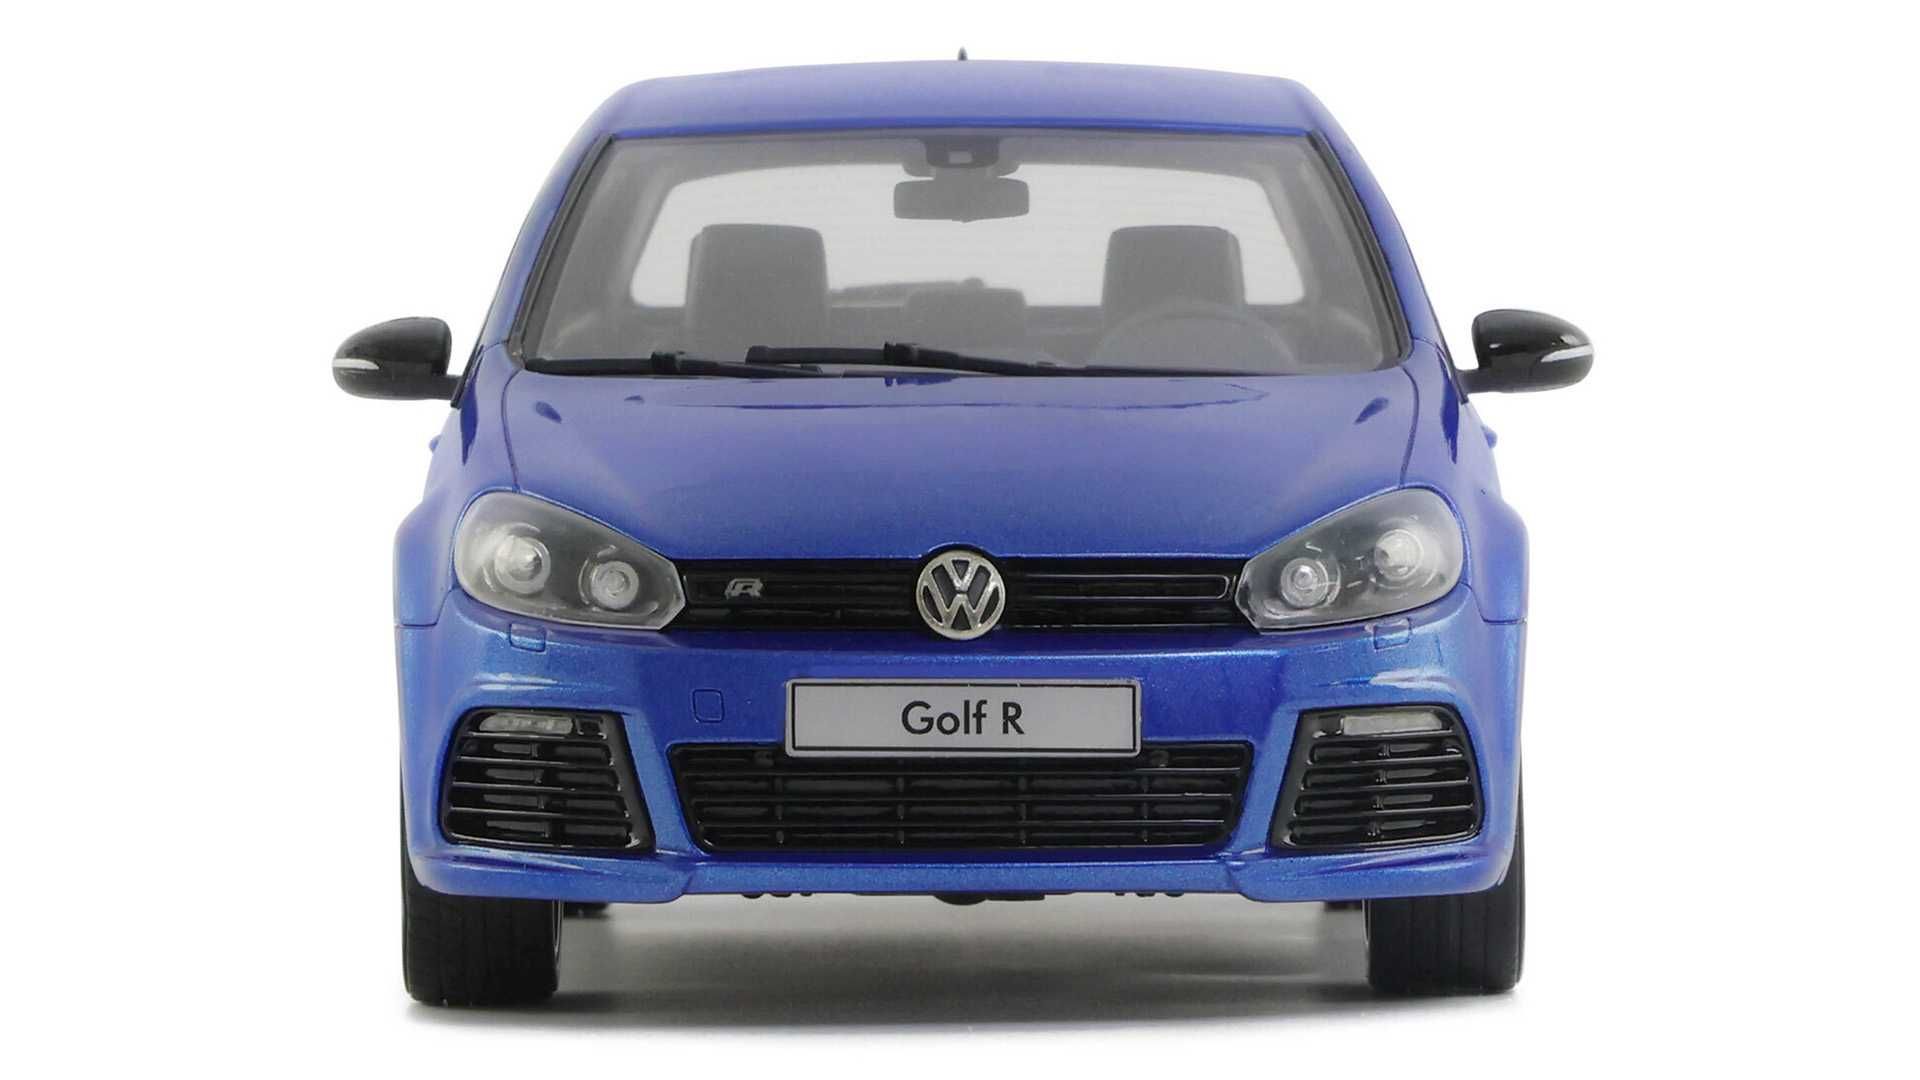 1:18 Otto Volkswagen VW Golf 6 R 2010 blue model